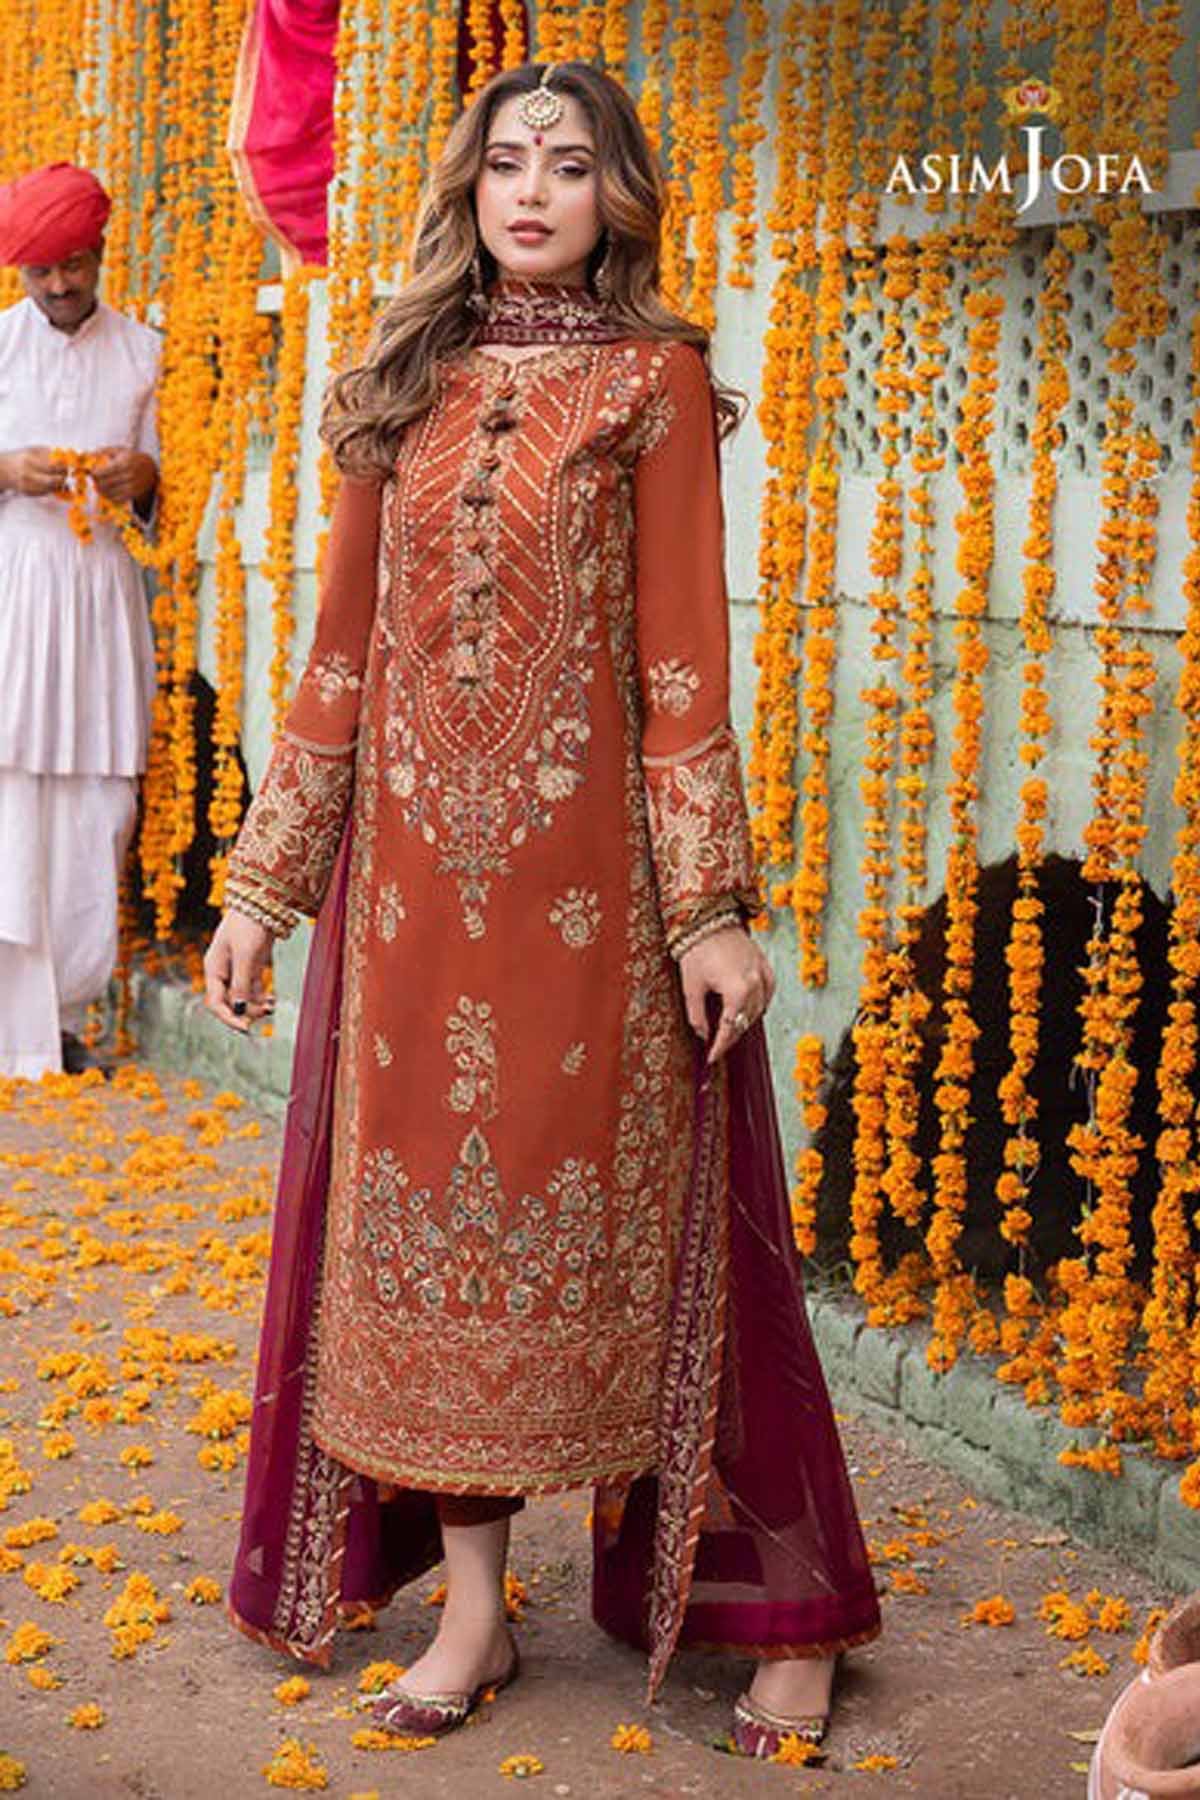 Asim Jofa women new dress design empires collection luxury lawn summer suit pakistan clothing fashion